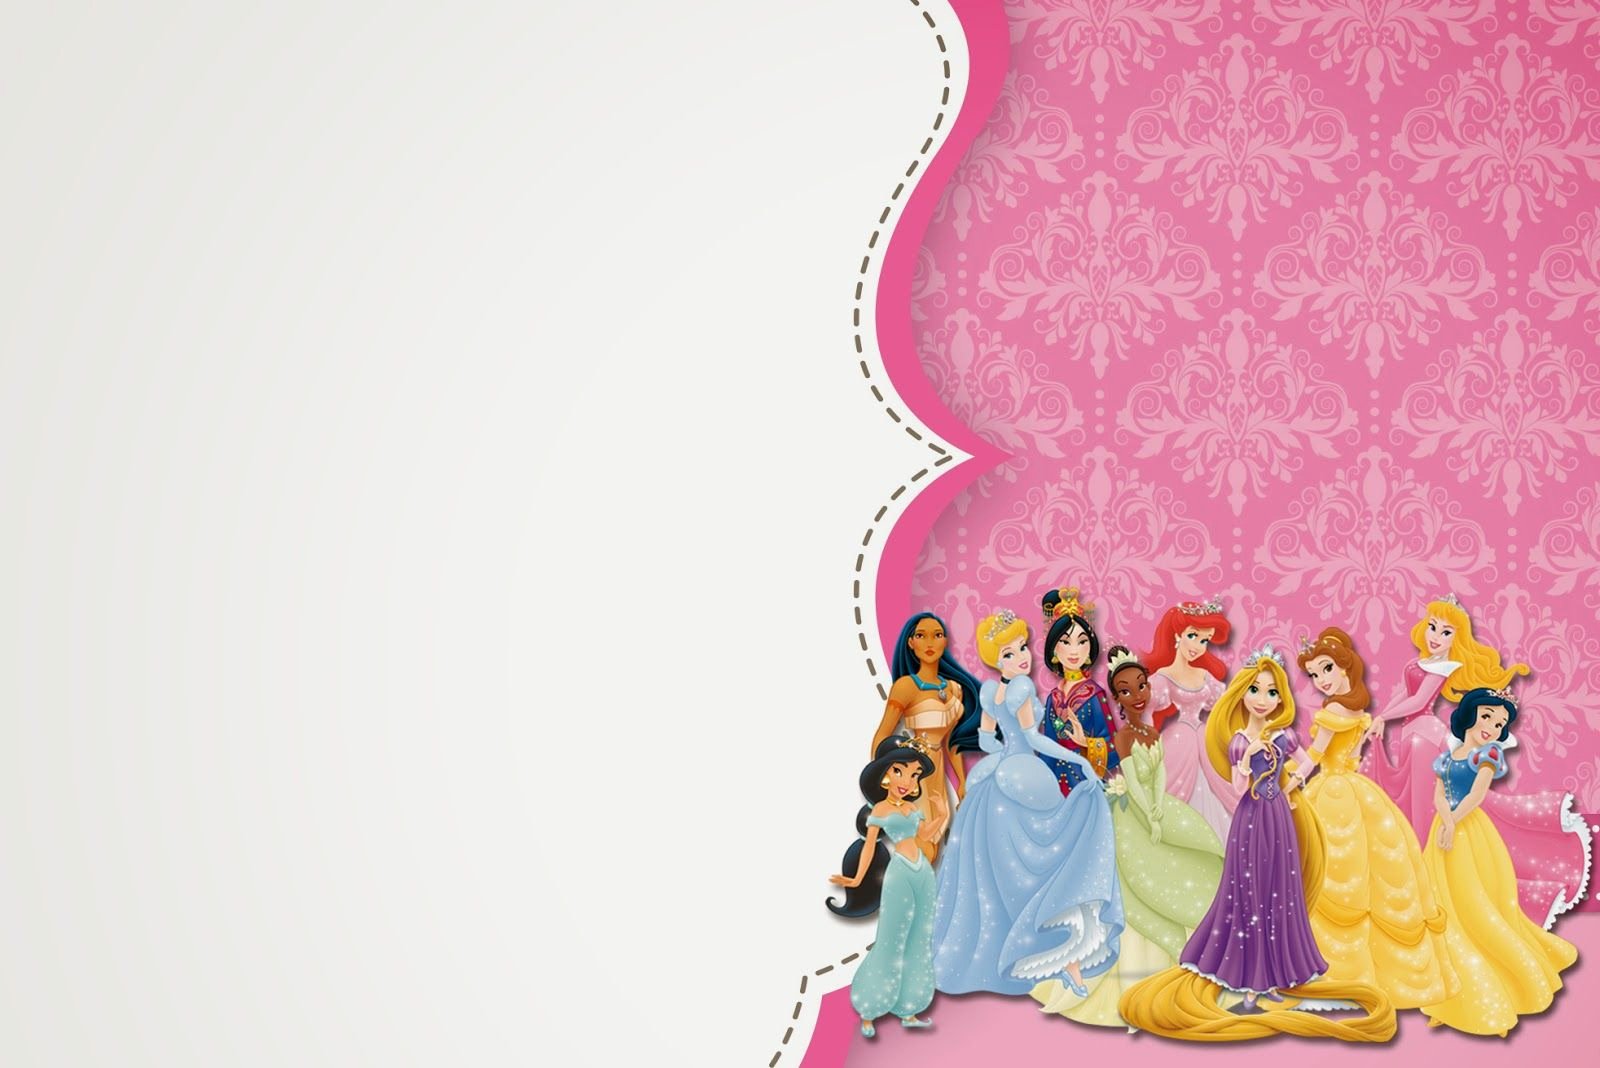 Free Printable Disney Princess Ticket Invitation Template